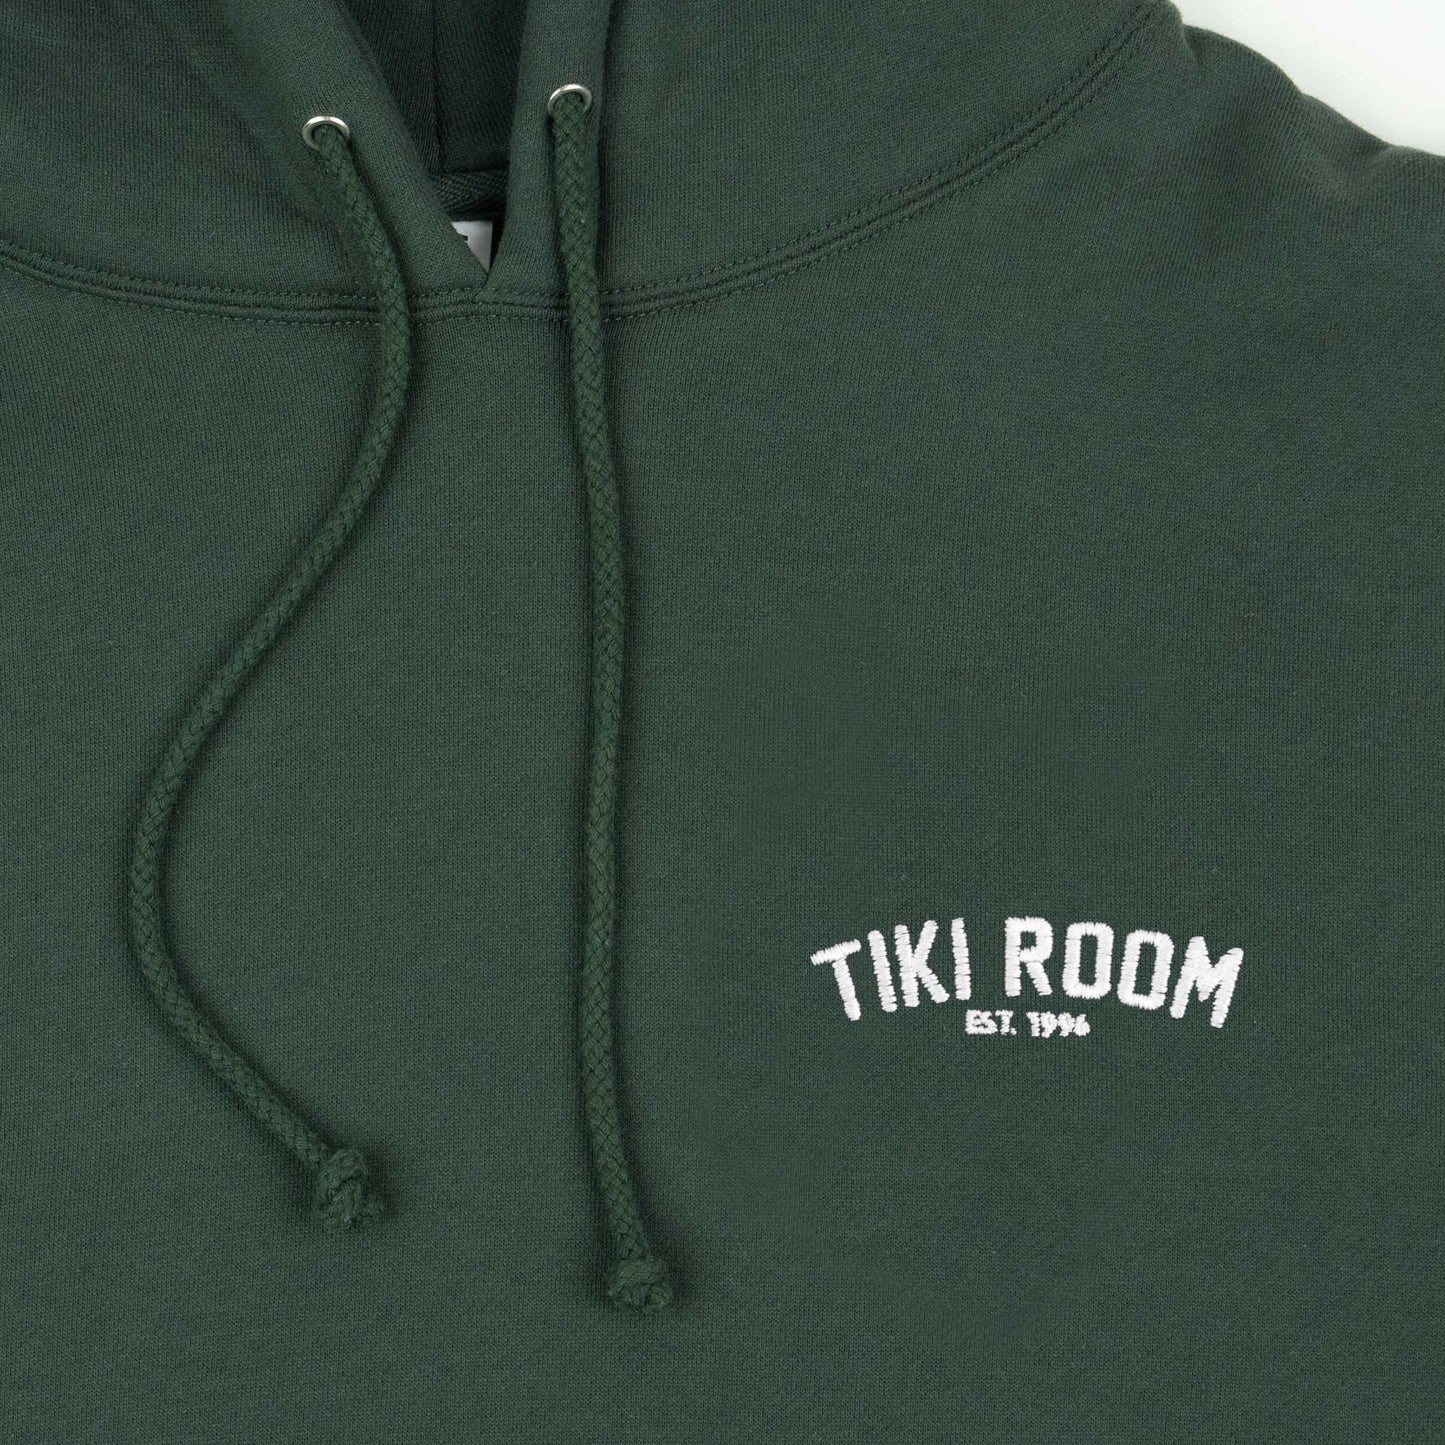 Tiki Room Embroidered Small Arch heavyweight hoody - Tiki Room Skateboards - 2